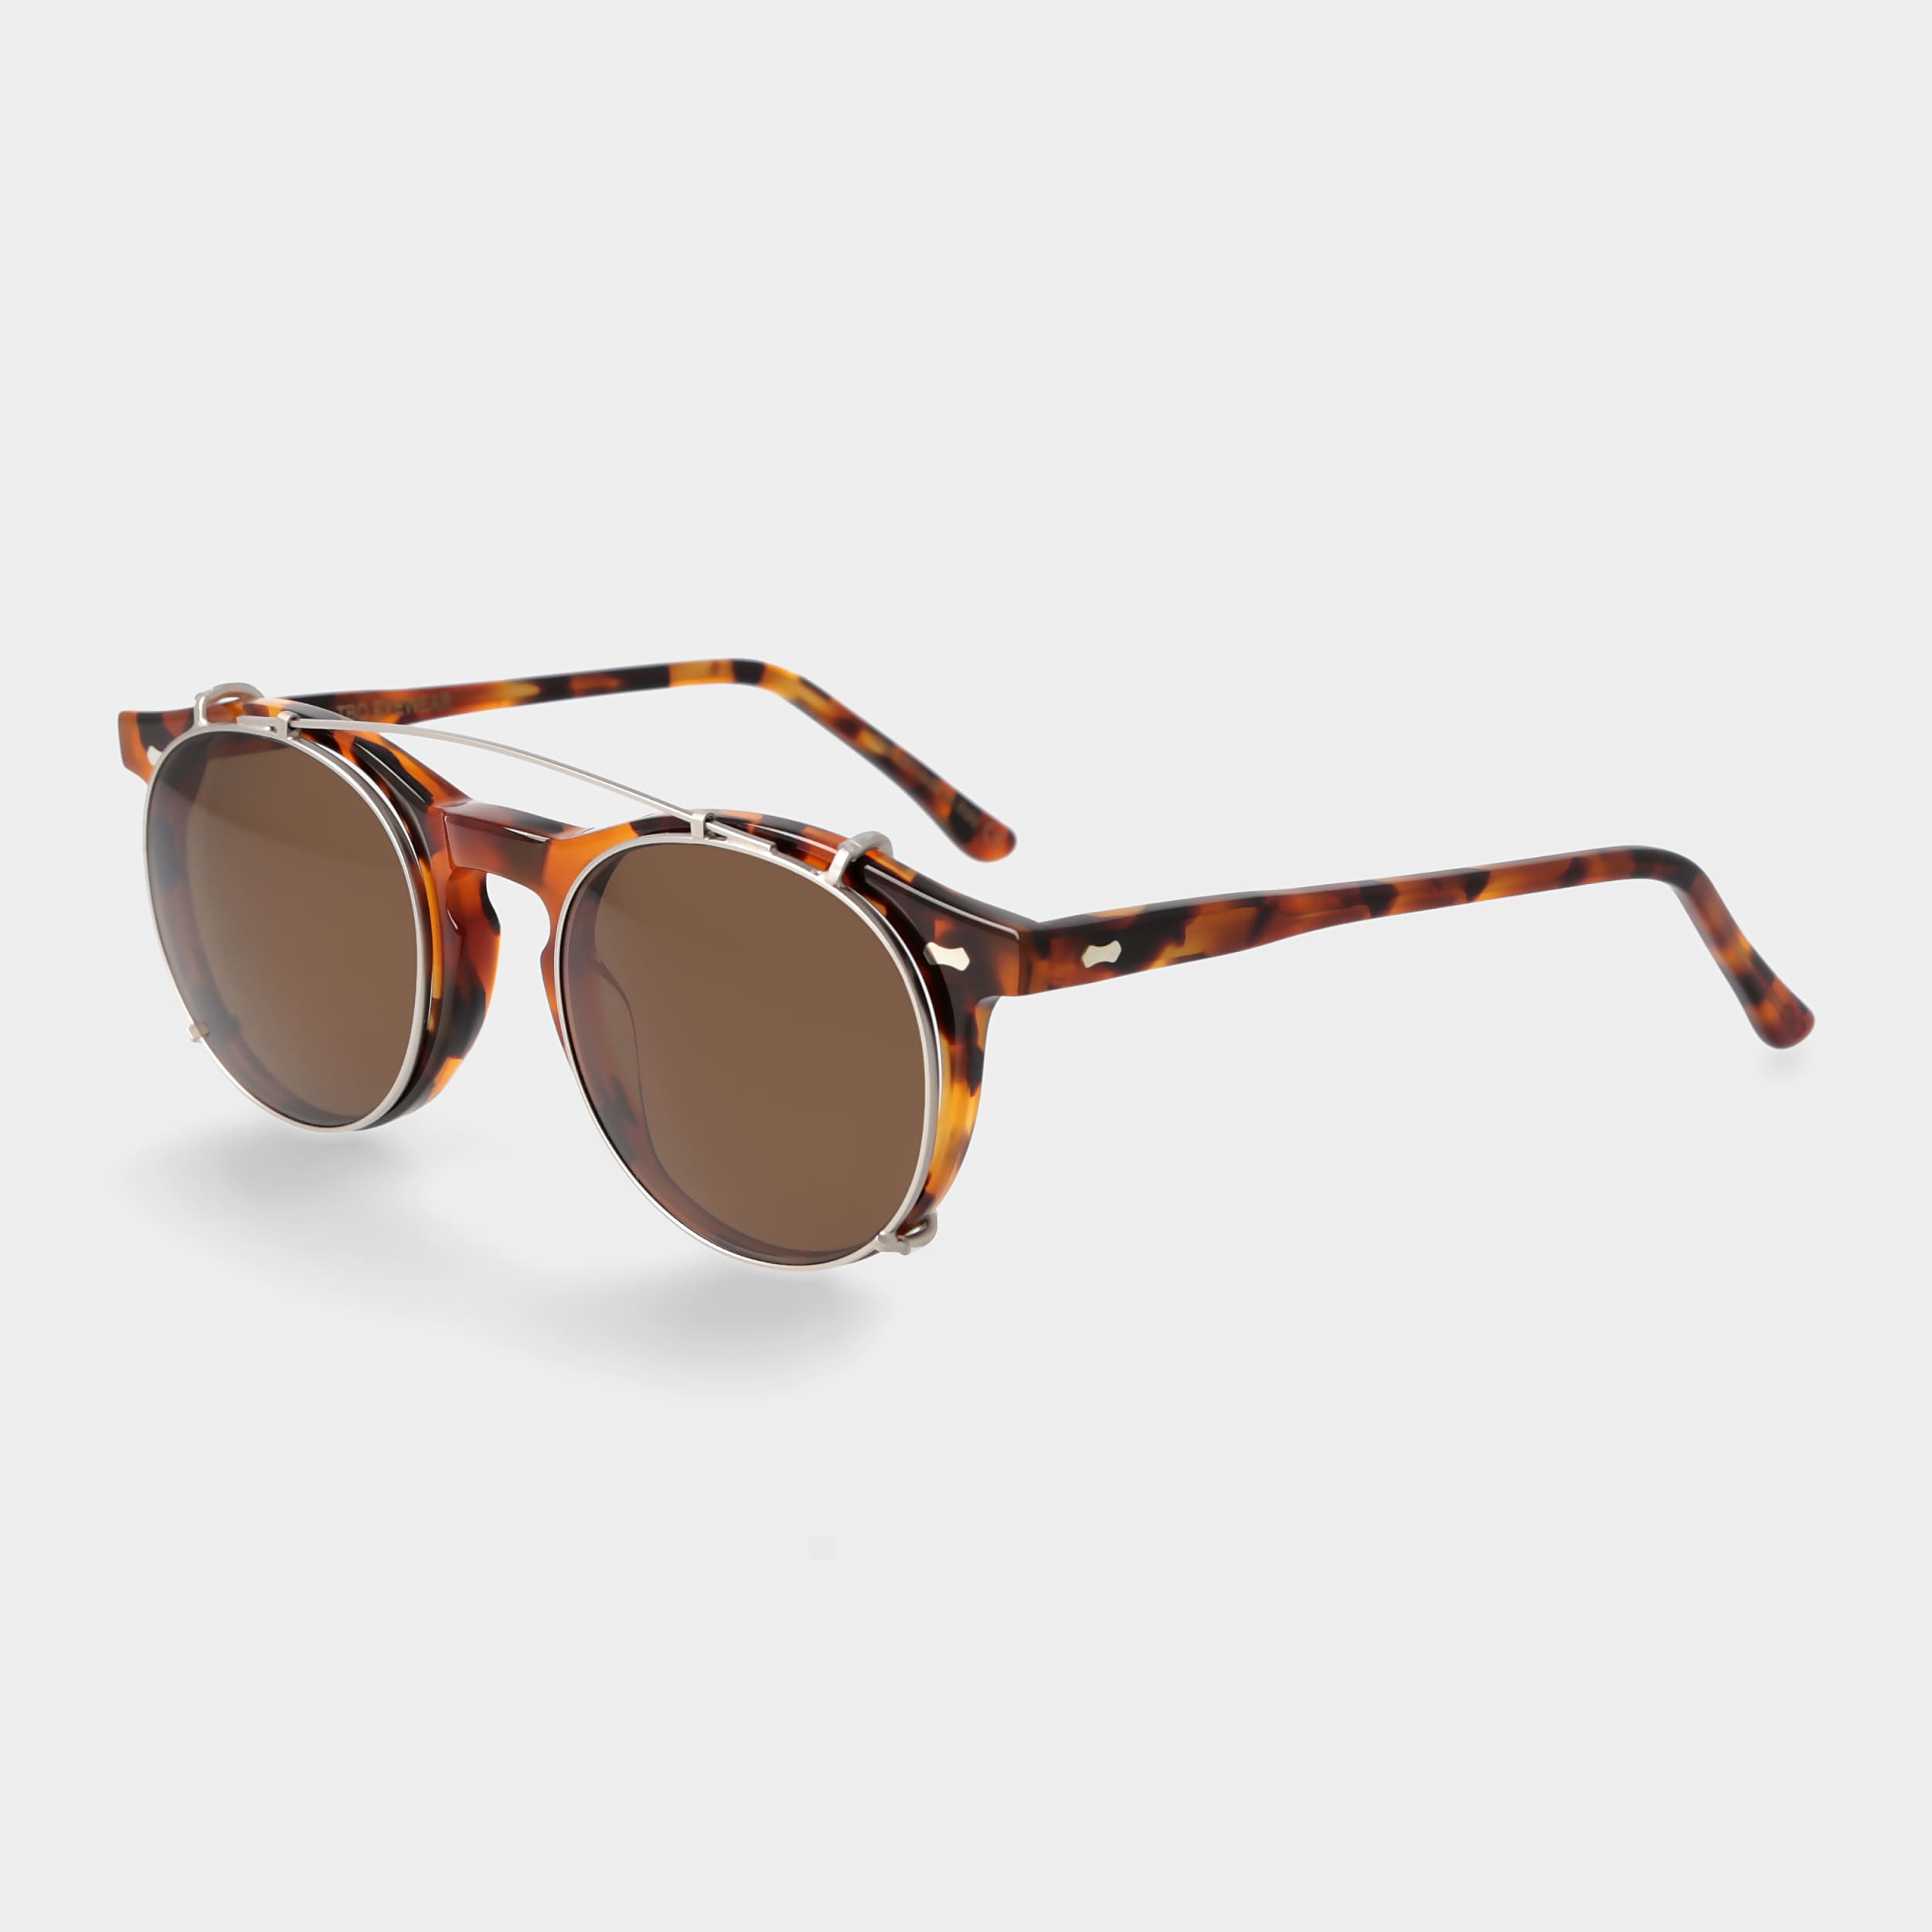 sunglasses-pleat-amber-tortoise-silver-tobacco-tbd-eyewear-total